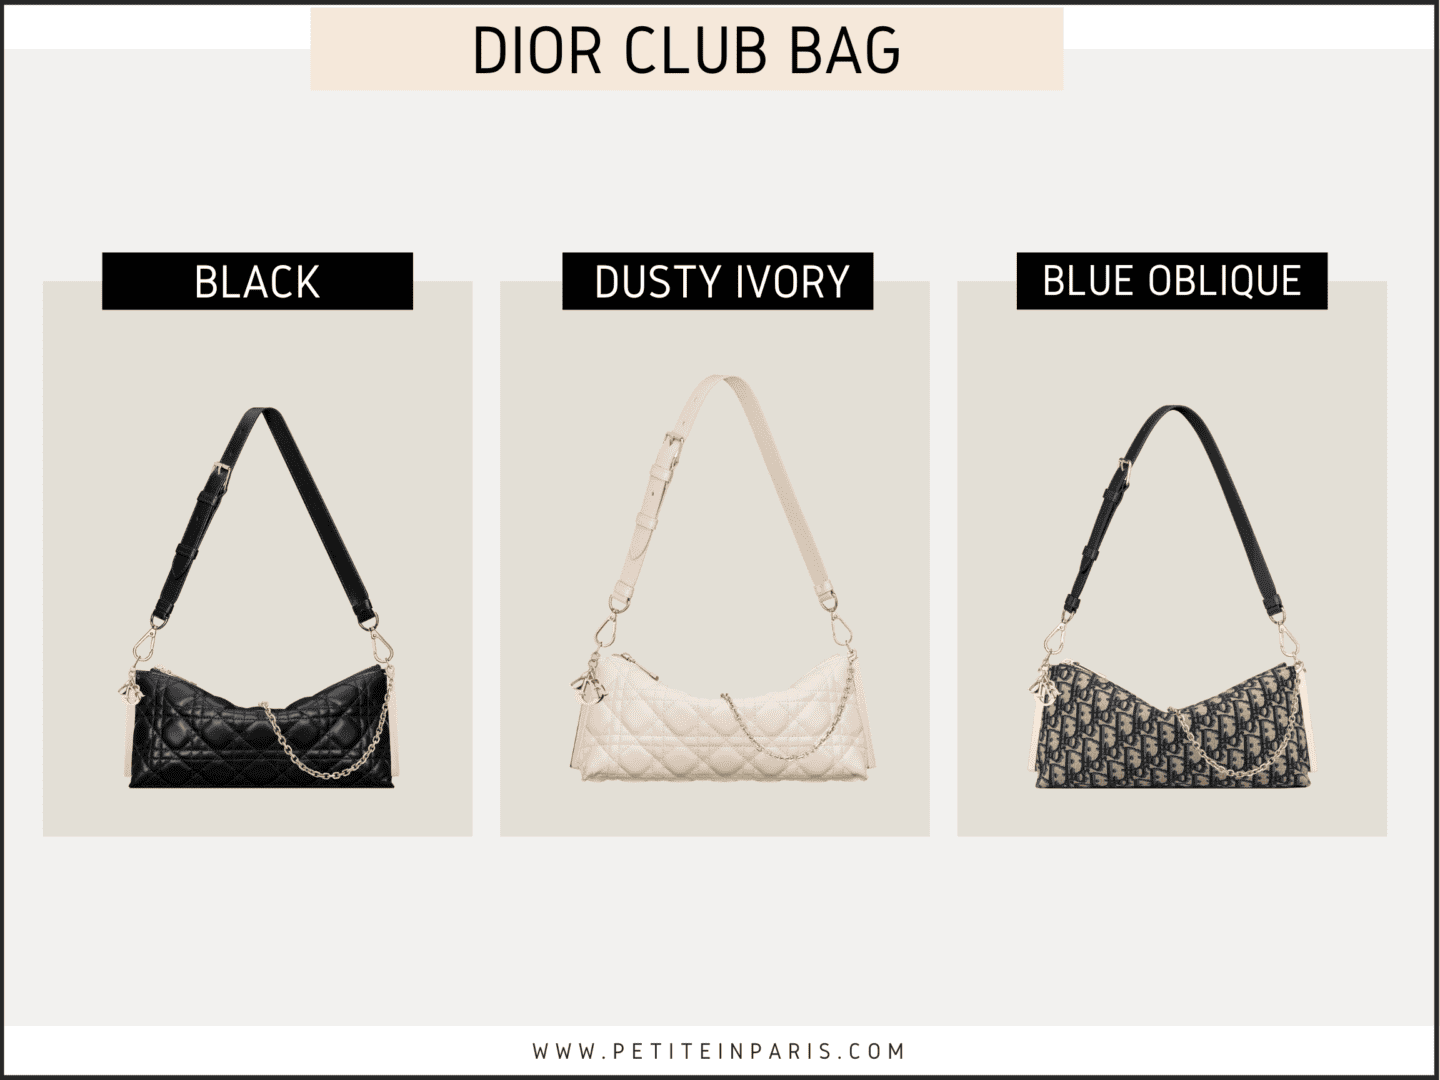 Cheap Dior Bags under $5,000 Dior Club Bag Color Options